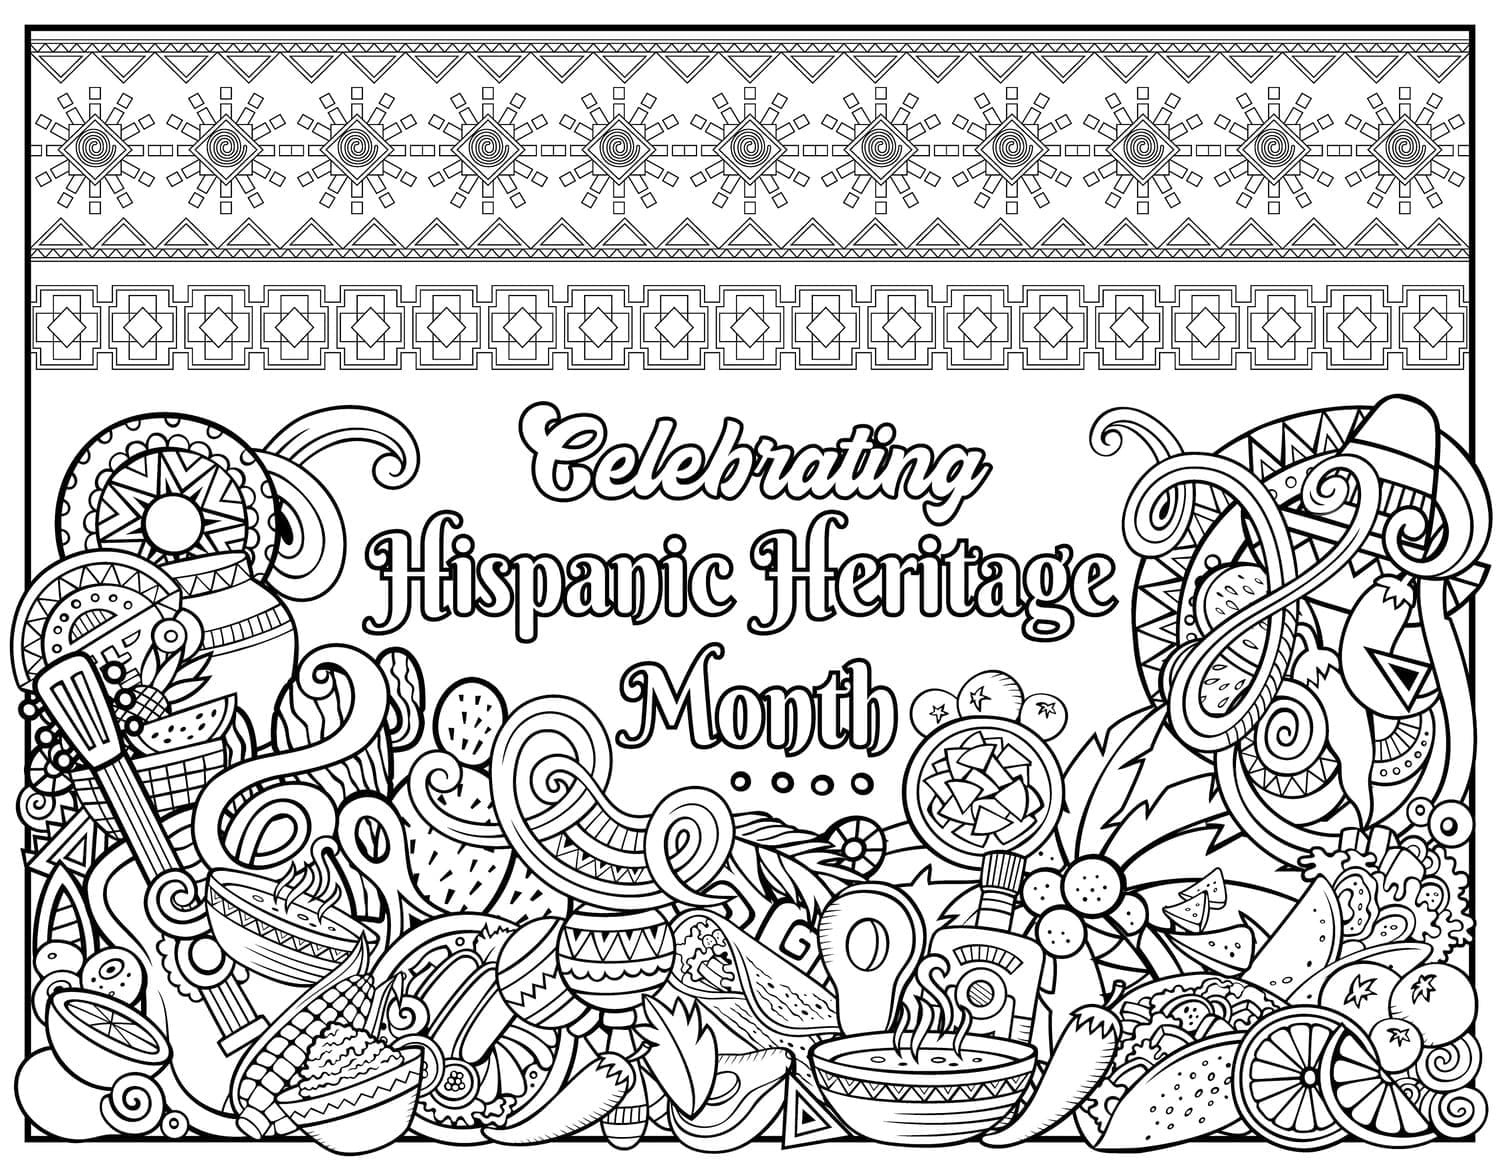 Printable Hispanic Heritage Month coloring page Download Print or